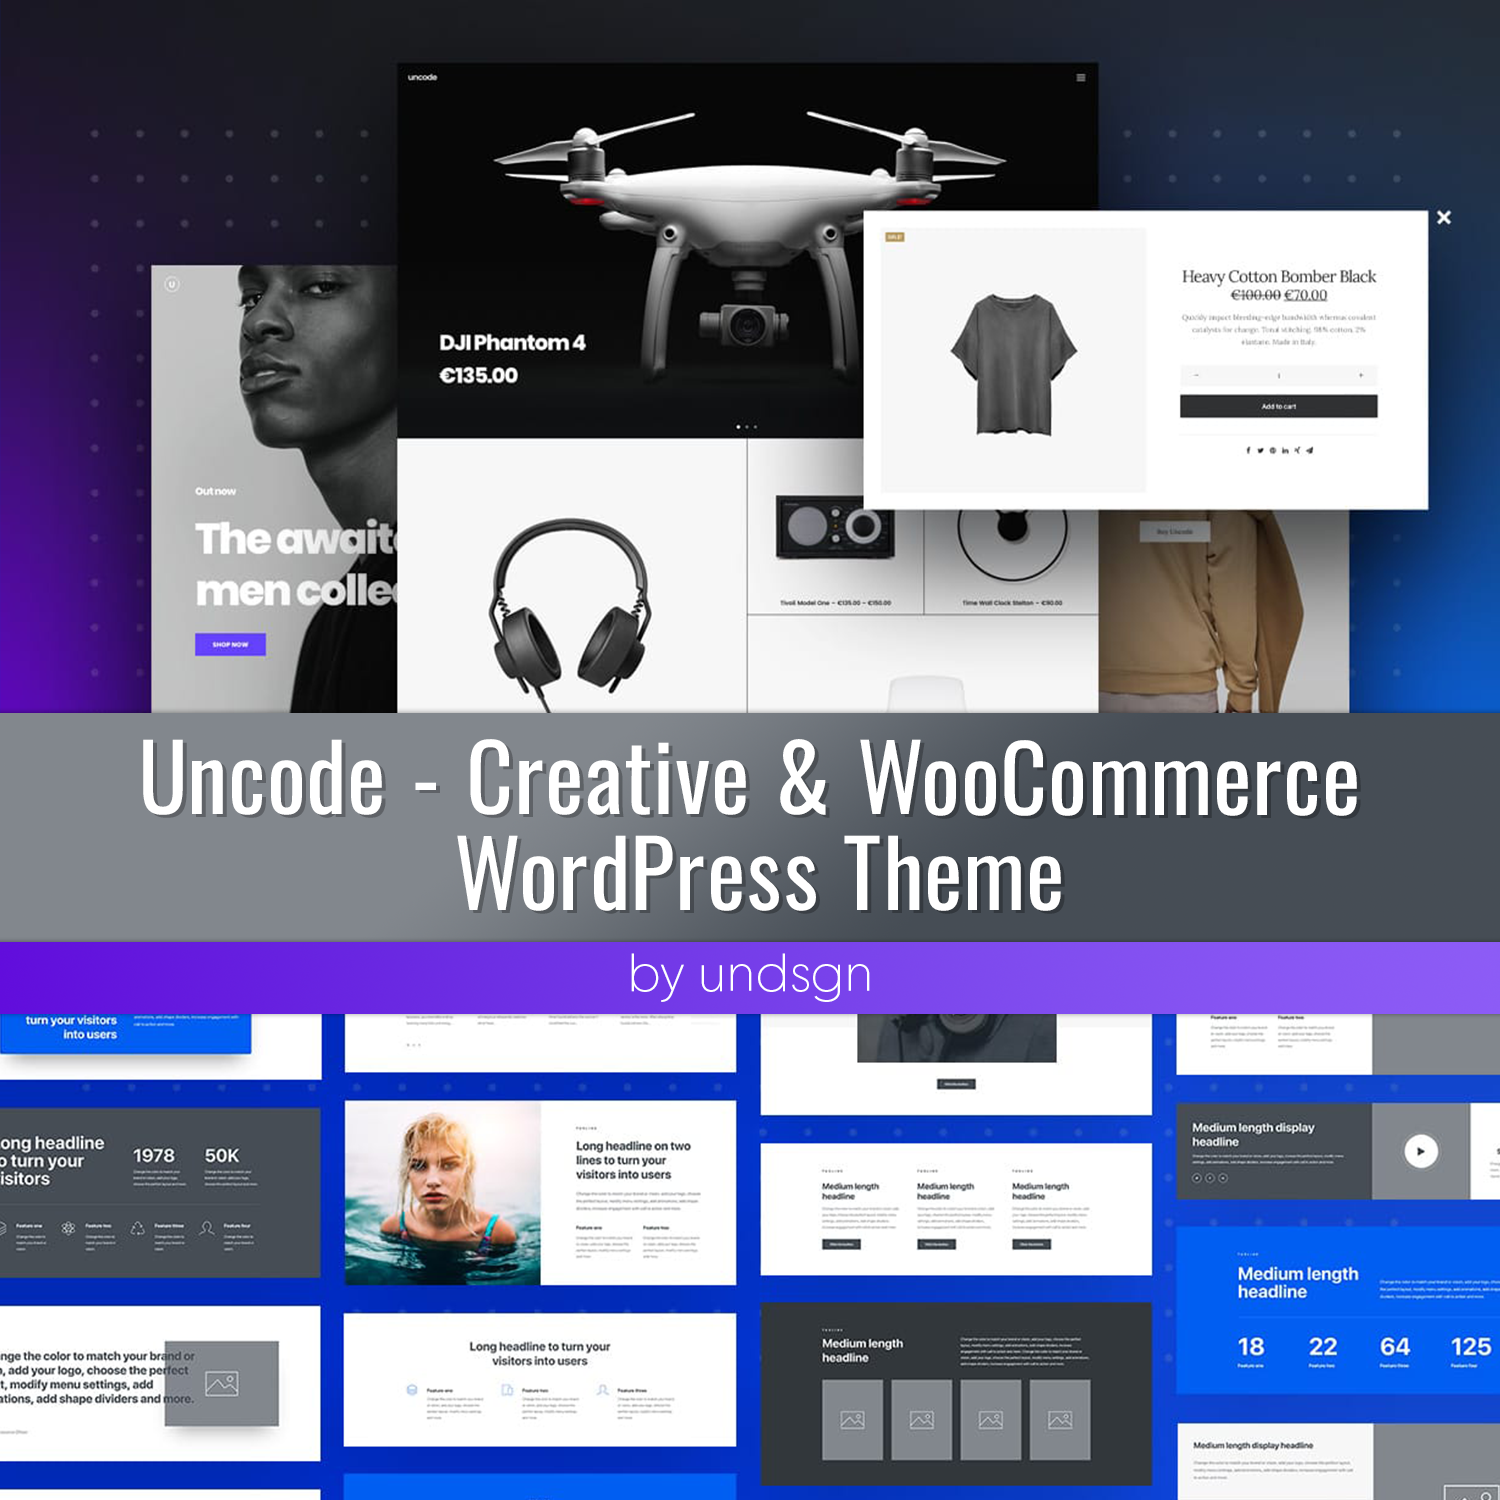 Preview uncode creative woocommerce wordpress theme.